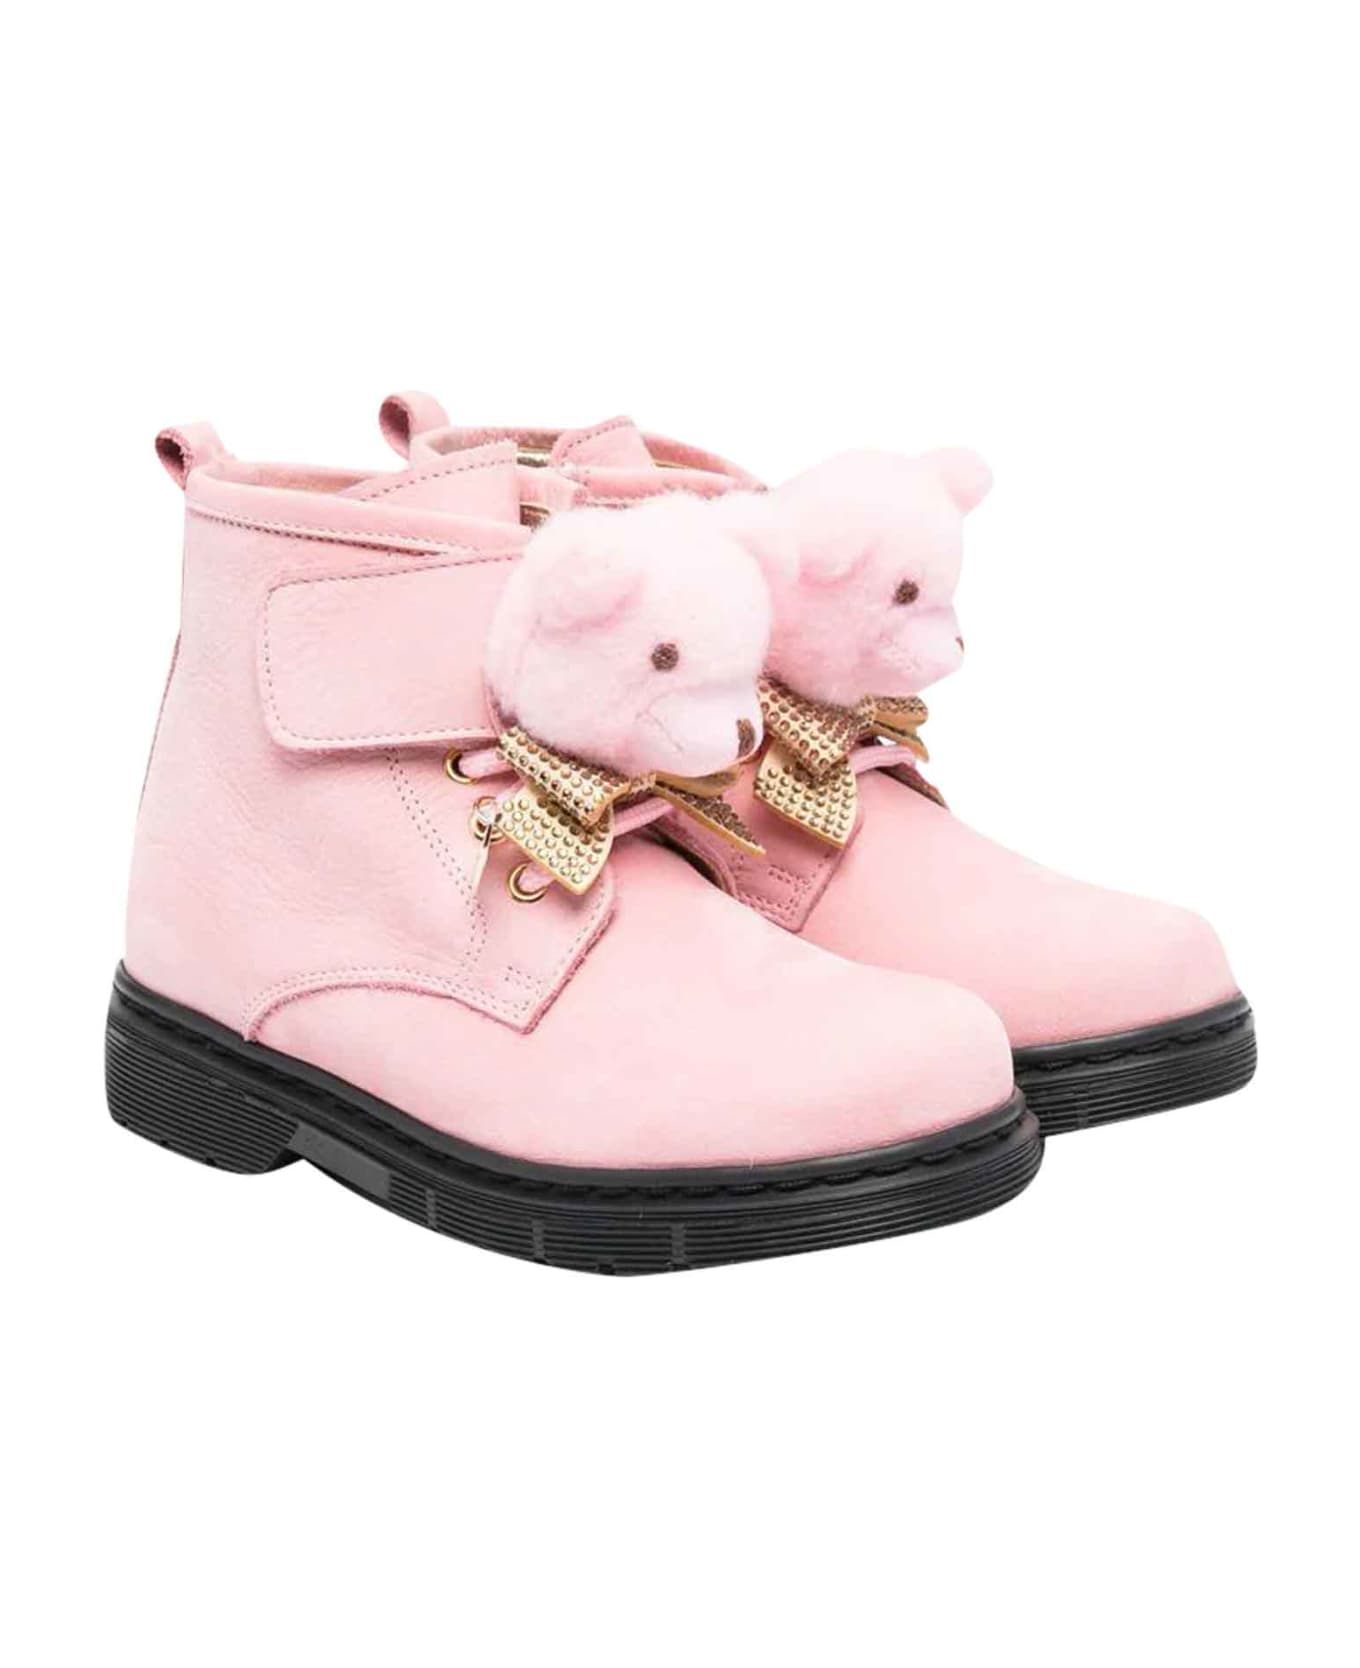 Monnalisa Pink Shoes Girl - Rosa chiaro